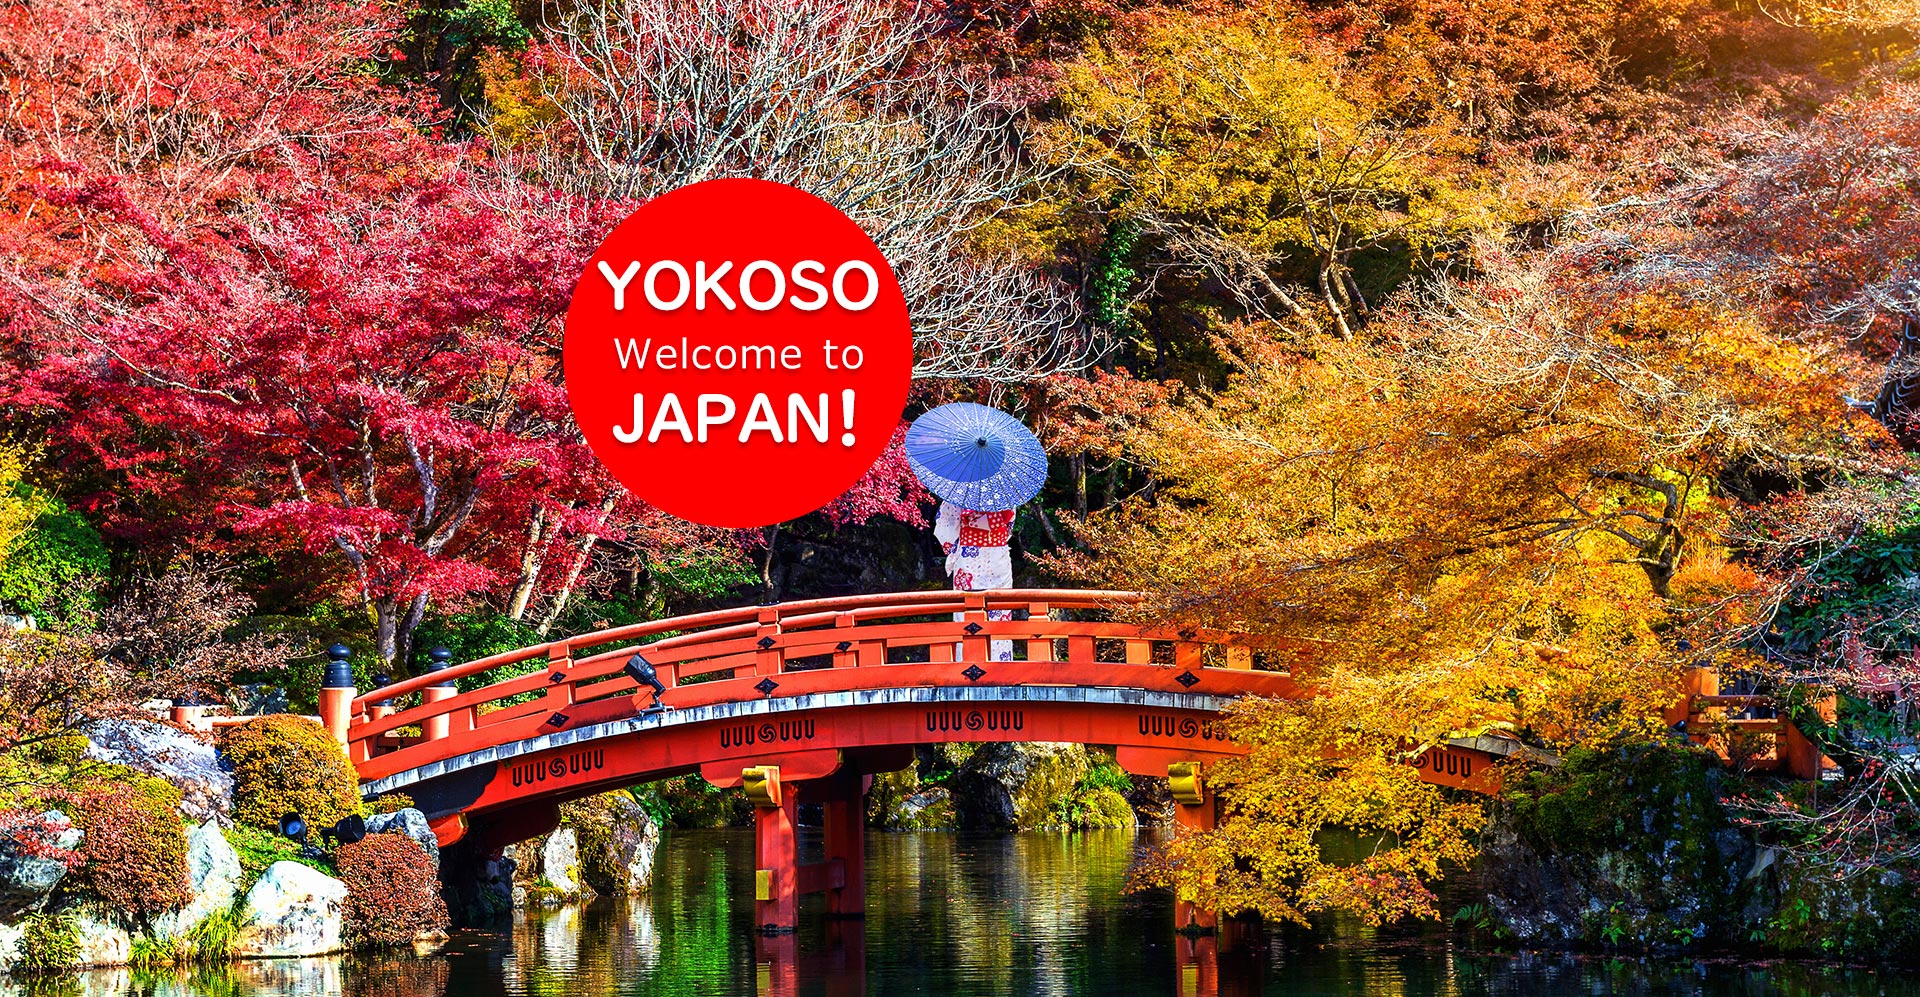 YOKOSO
Welcome to JAPAN!